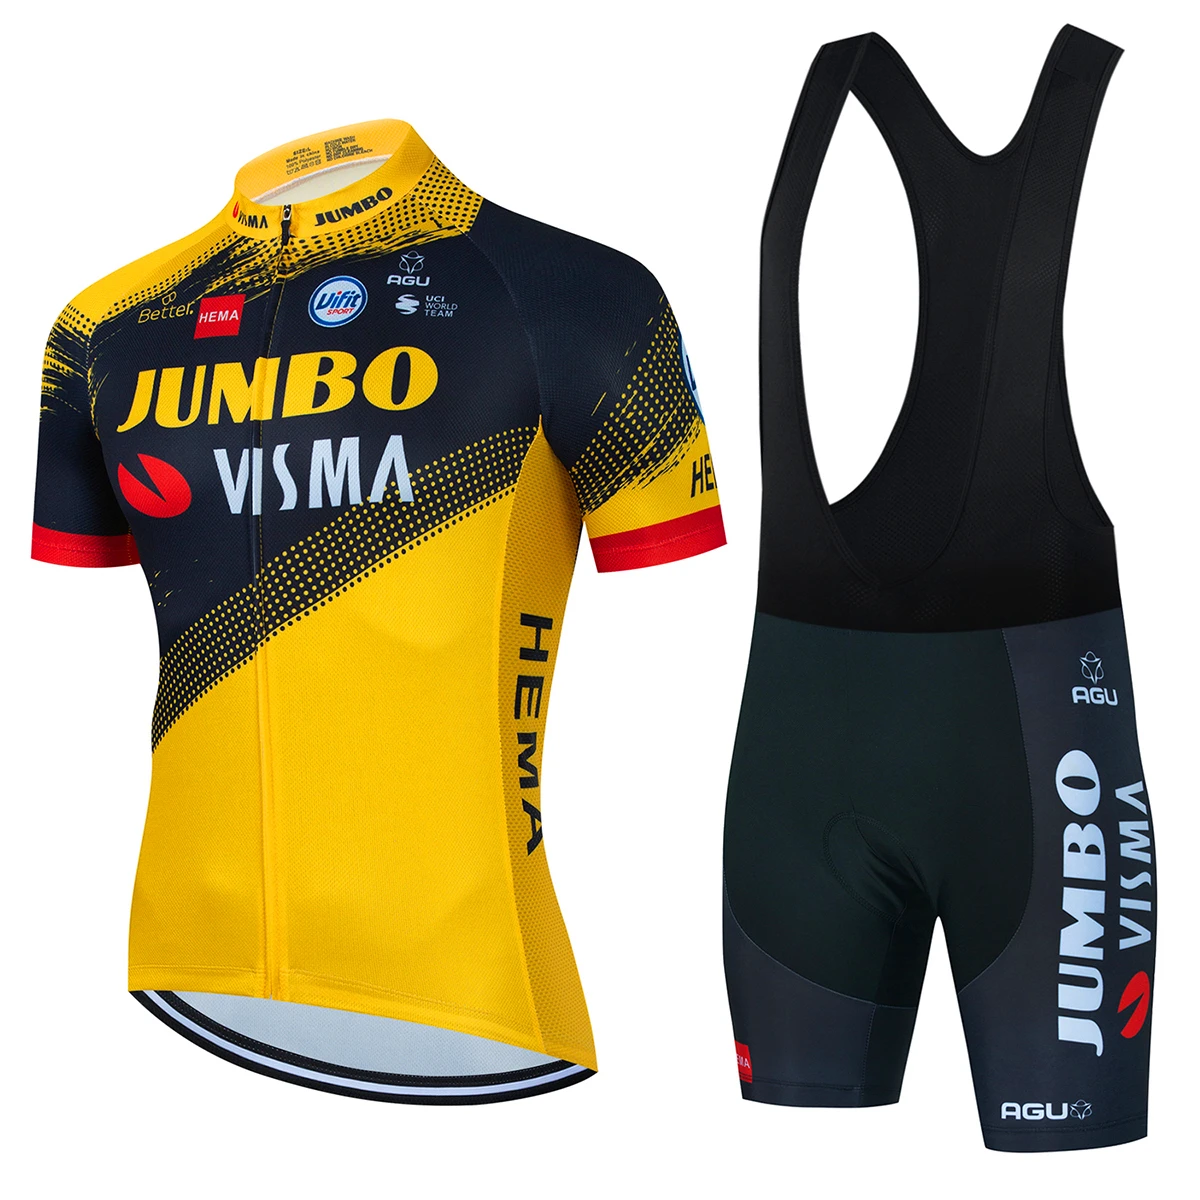 

2022 Pro JUMBO VISMA Cycling Jersey Set Men's Cycling Clothing Road Bike Shirts Suit Bicycle Bib Shorts MTB Wear Maillot Culotte